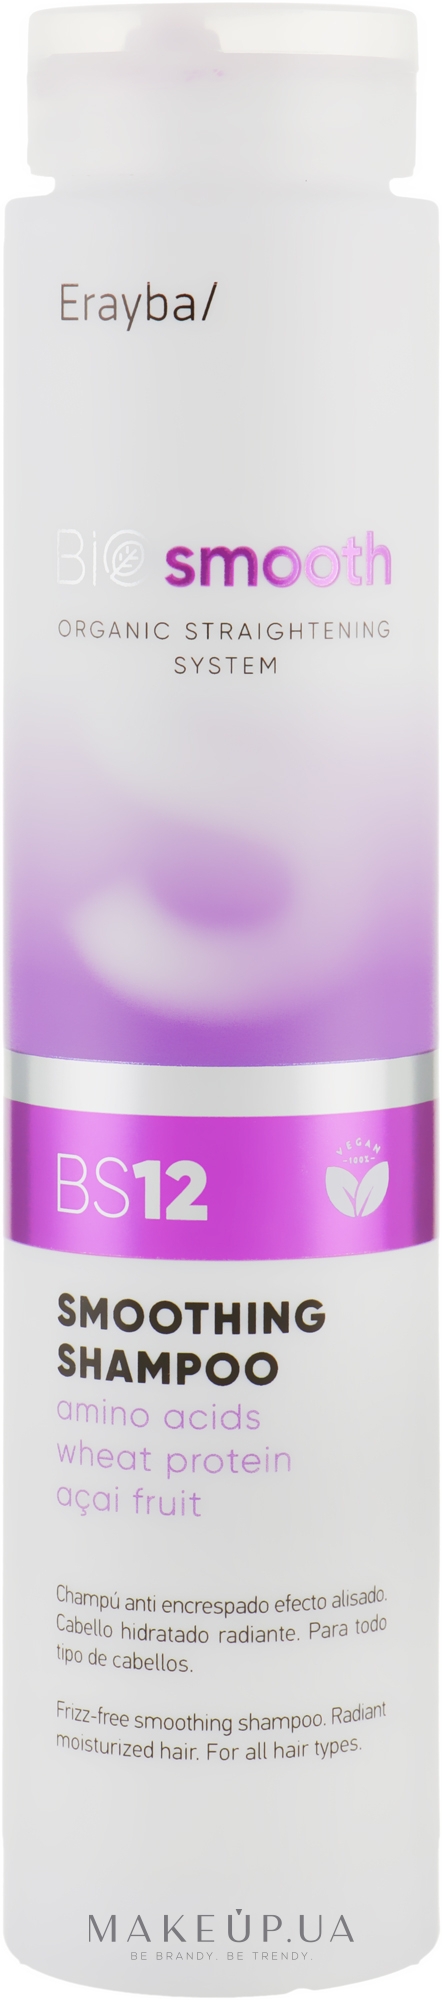 Шампунь для випрямлення волосся - Erayba Bio Smooth Smoothing Shampoo BS12 — фото 250ml